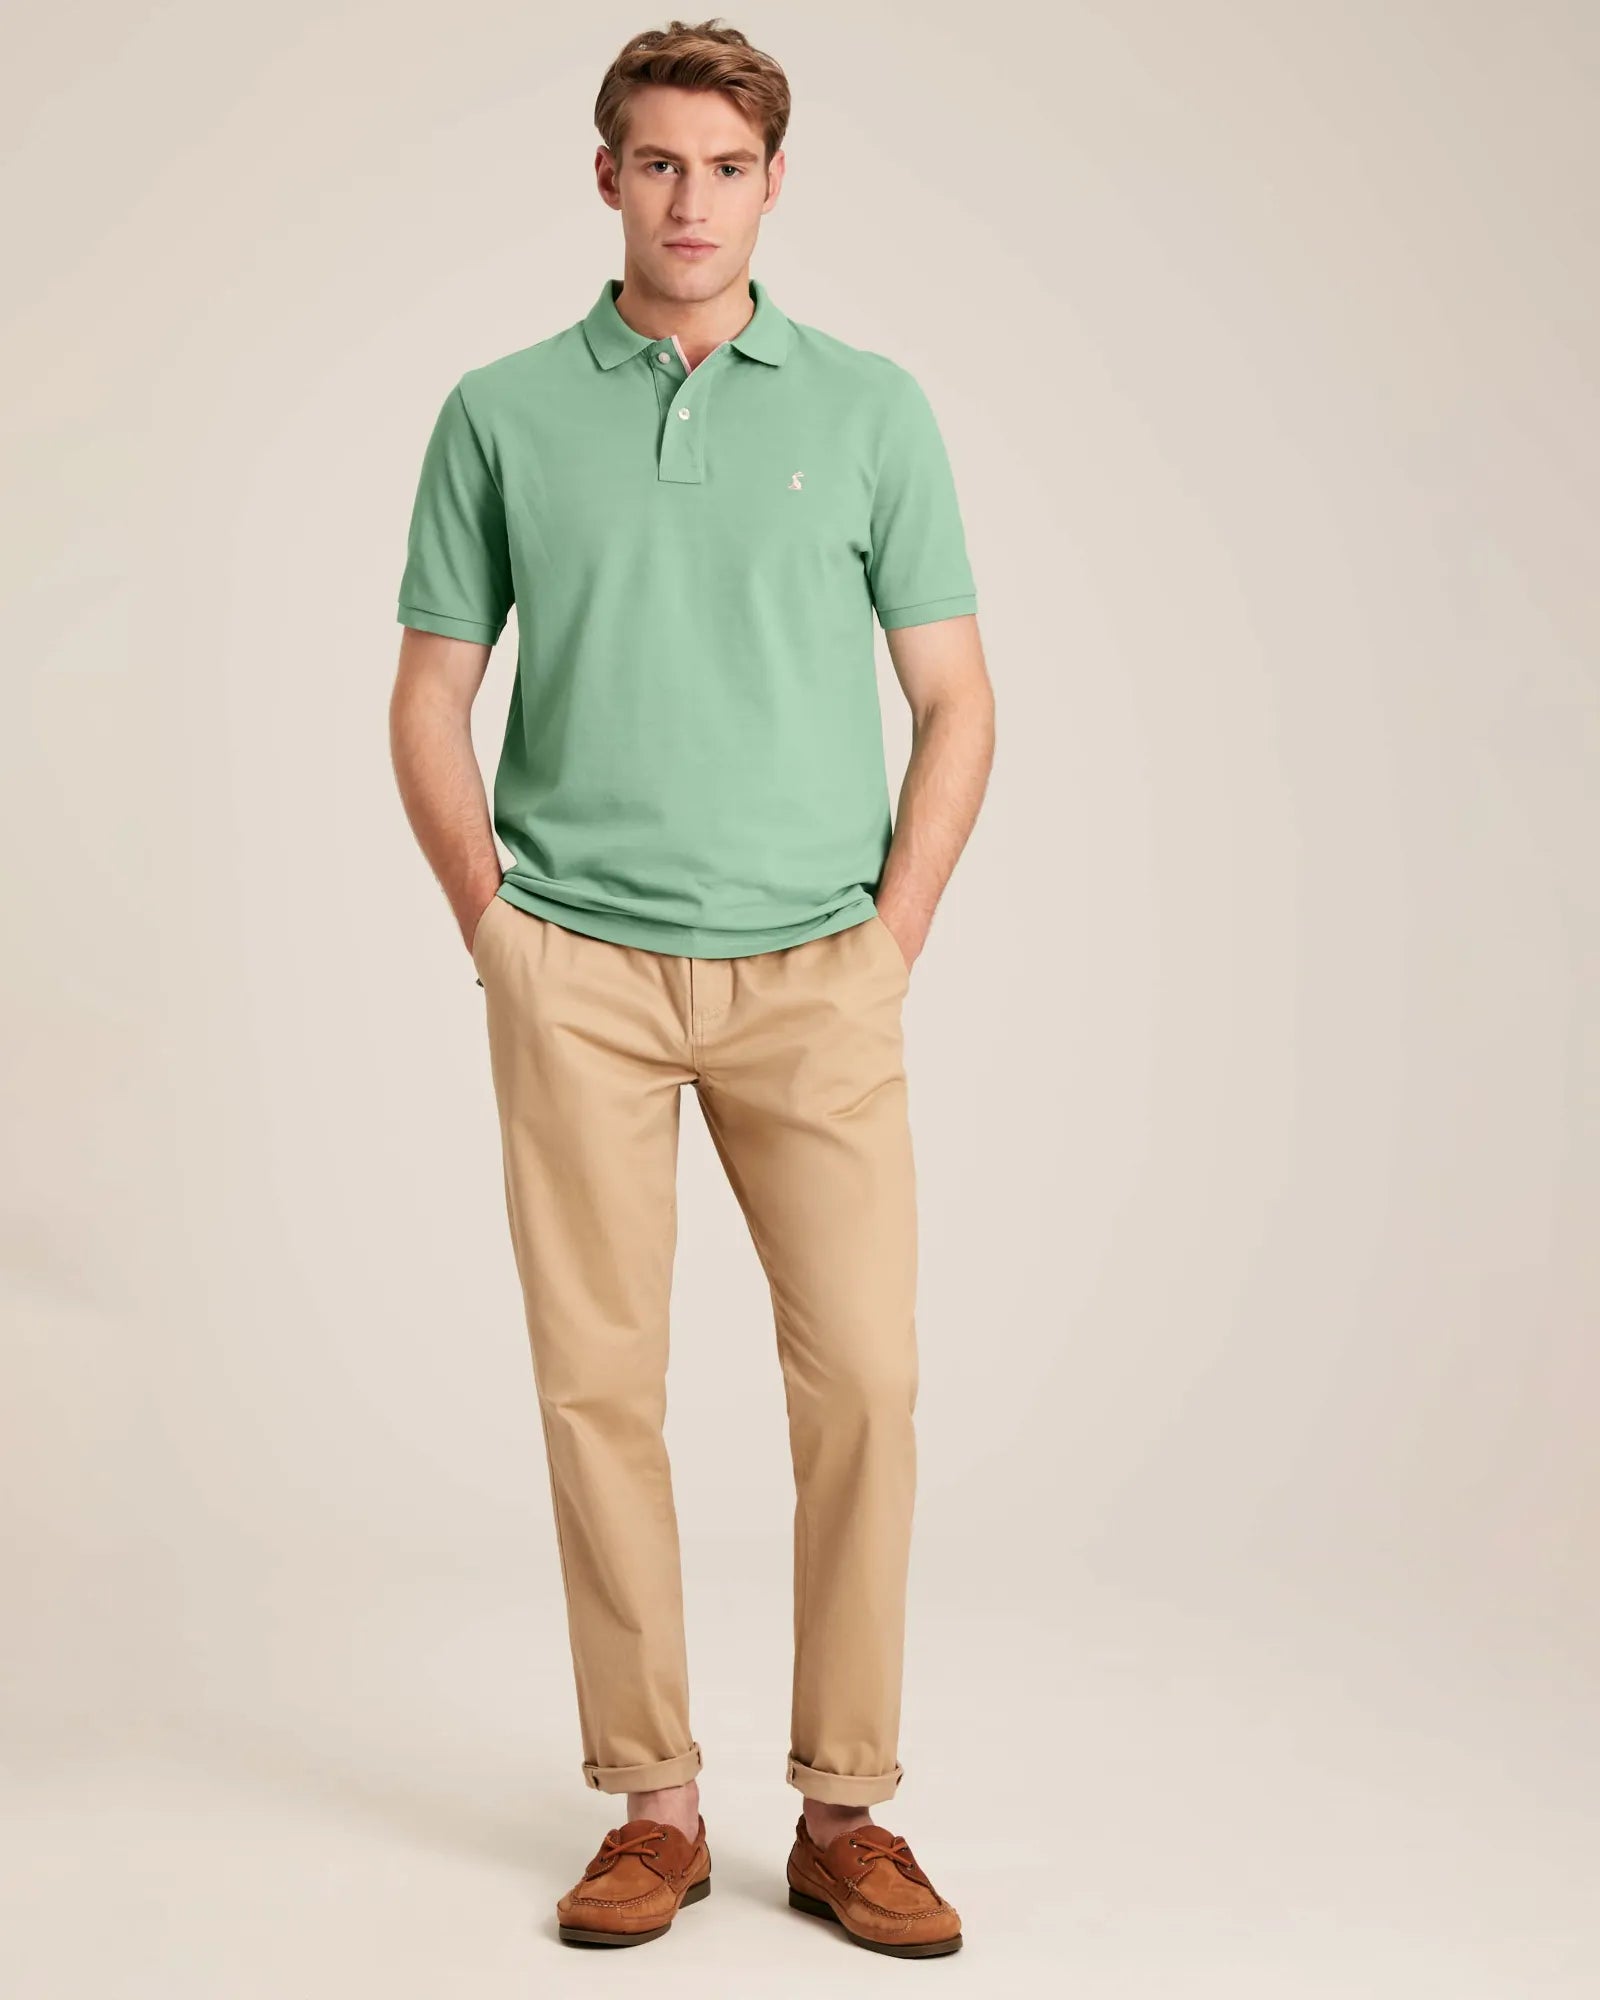 Woody Sporting Green Cotton Polo Shirt